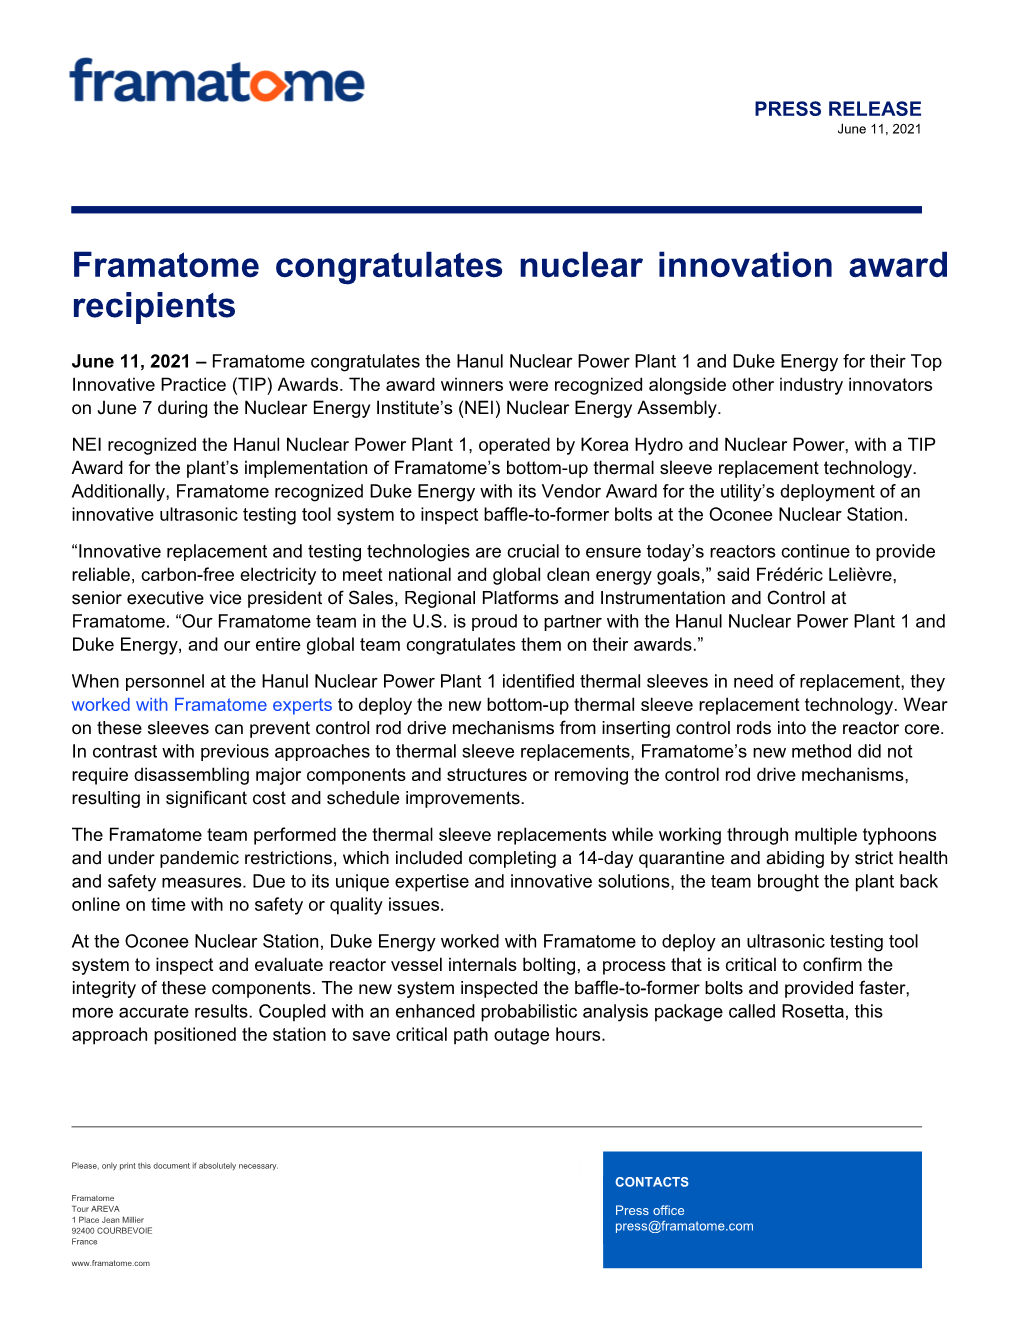 Framatome Technolgies Recognized for TIP Awards